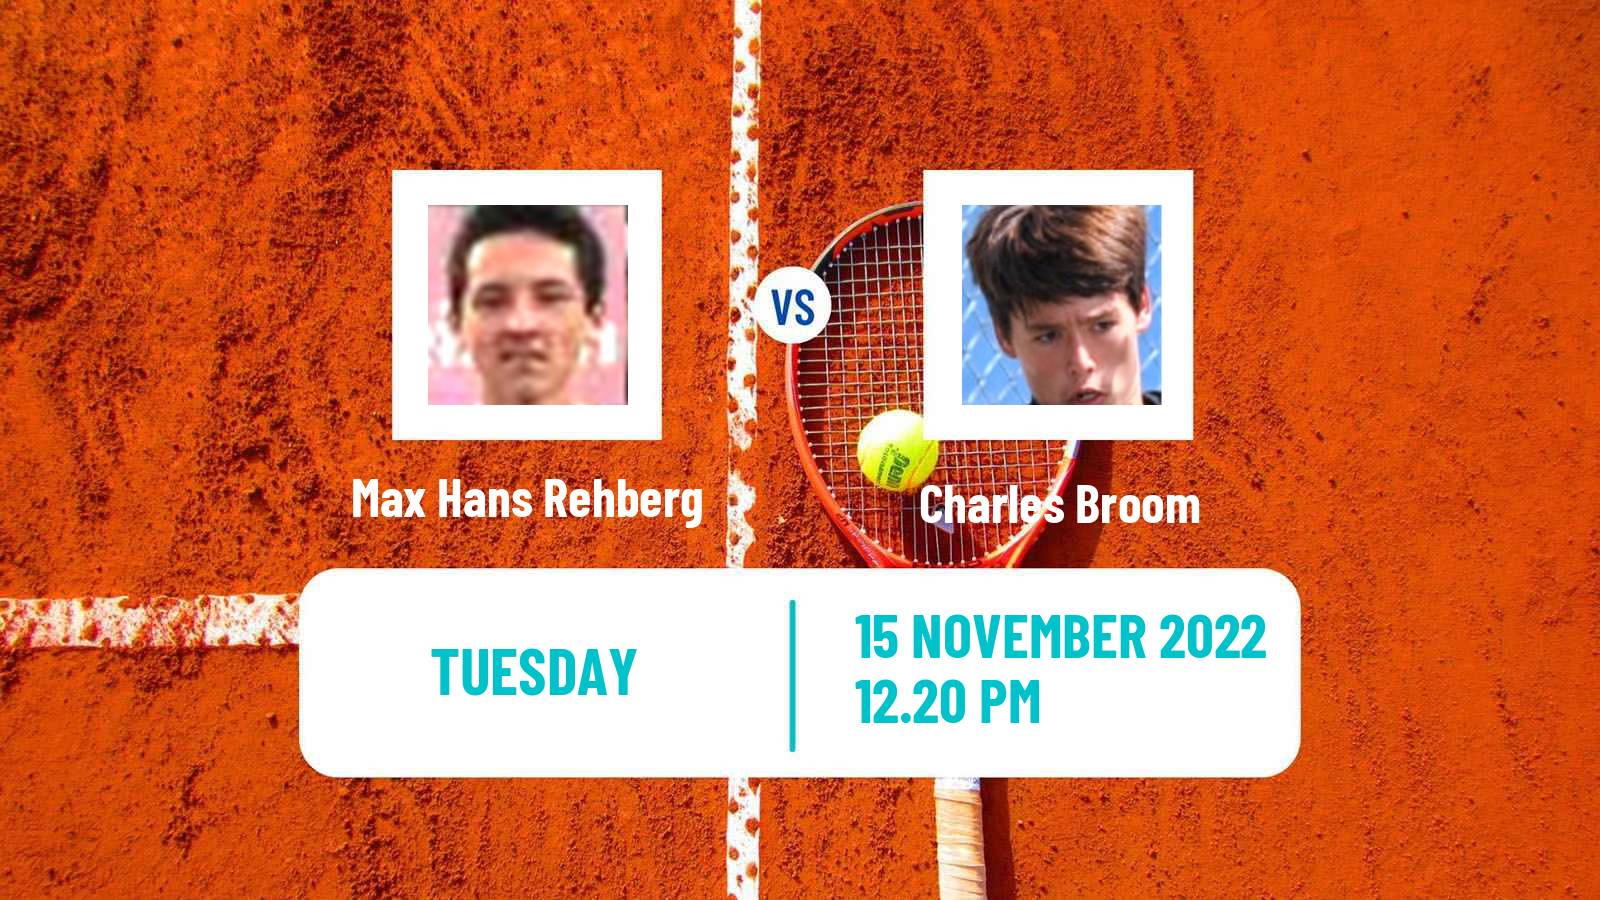 Tennis ATP Challenger Max Hans Rehberg - Charles Broom